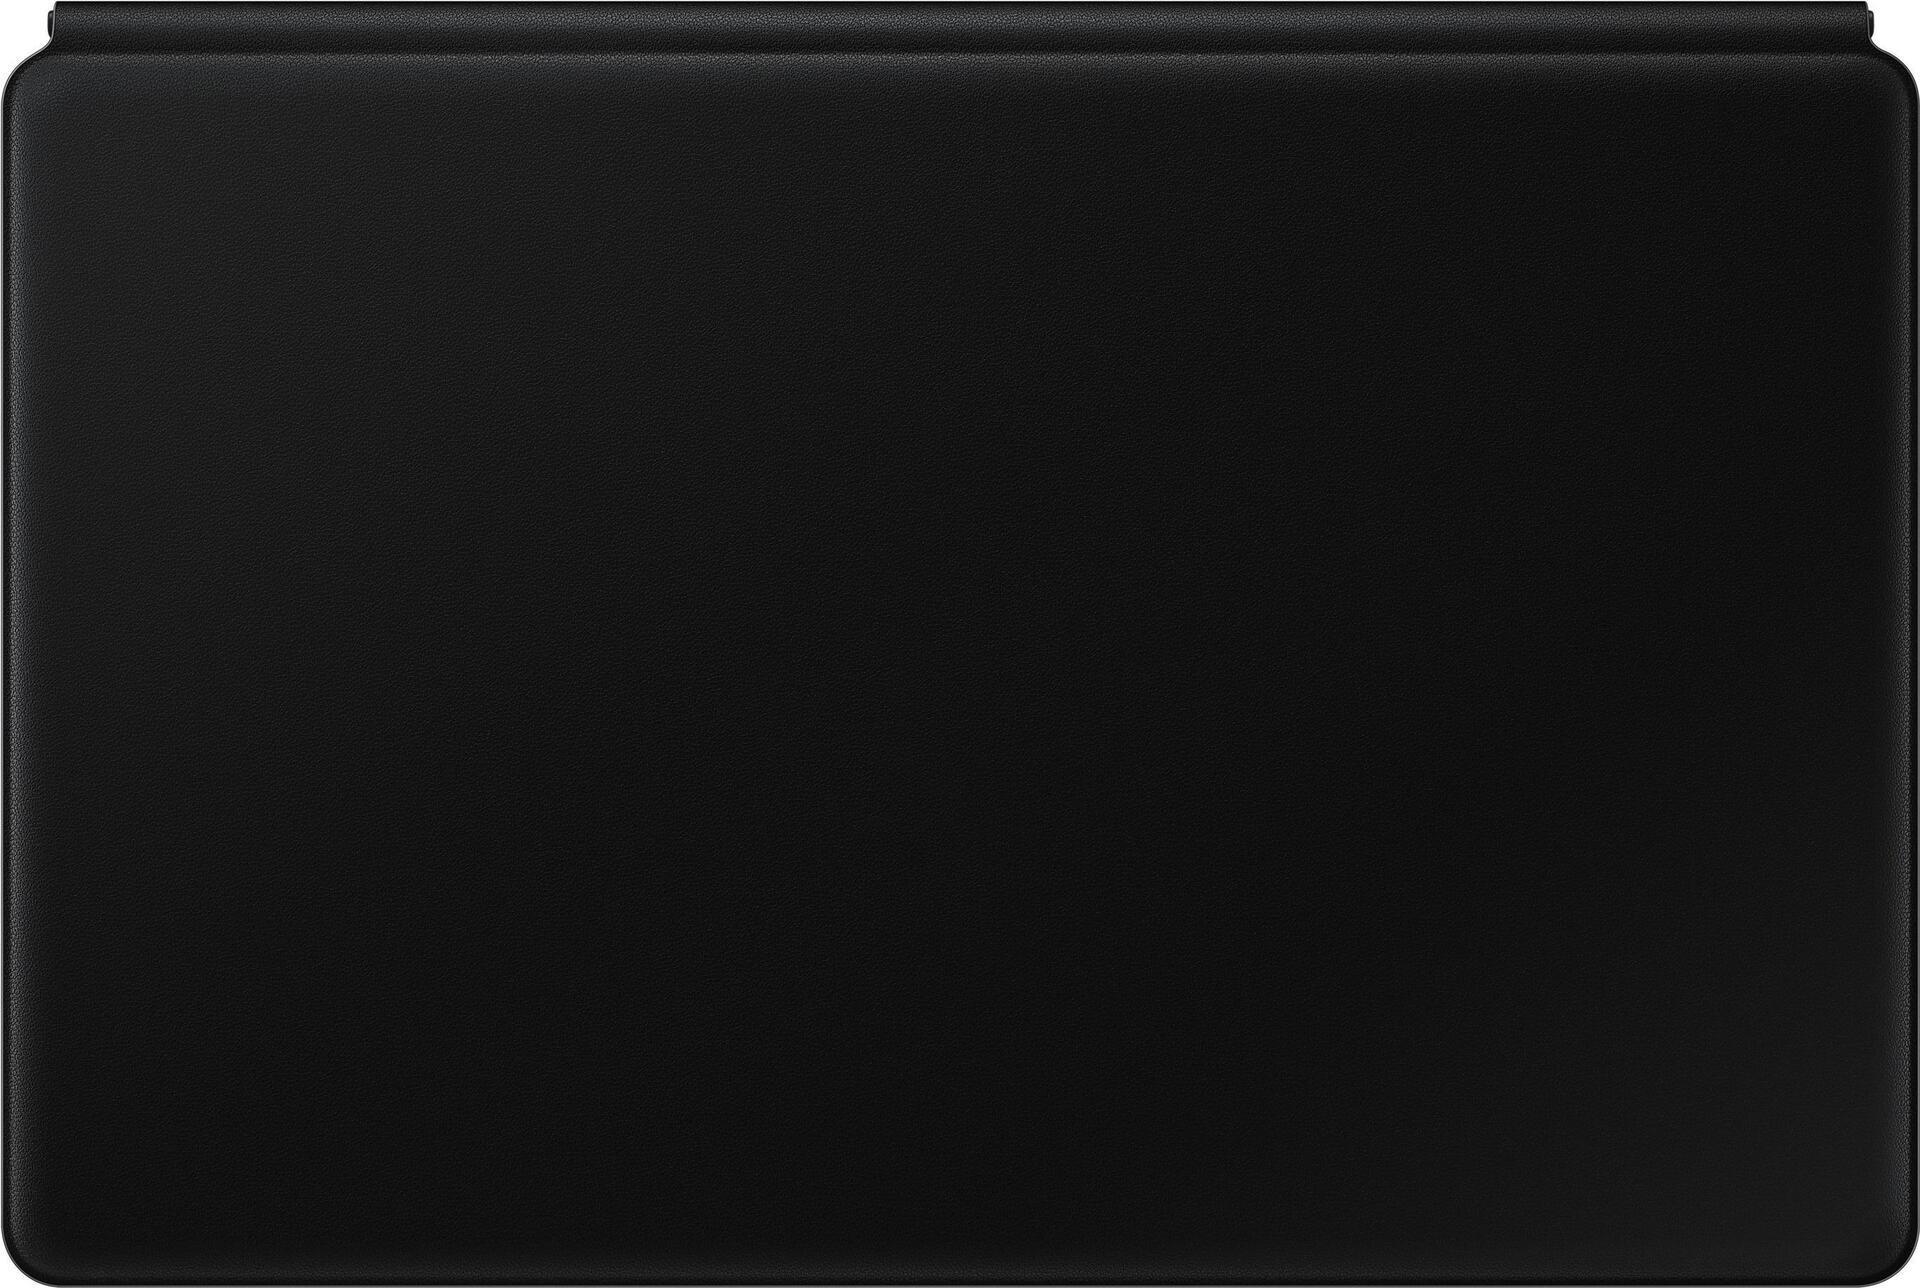 Samsung Galaxy Tab S7+ Keyboard Cover Black (EF-DT970) (QWERTZ) planšetdatora soma